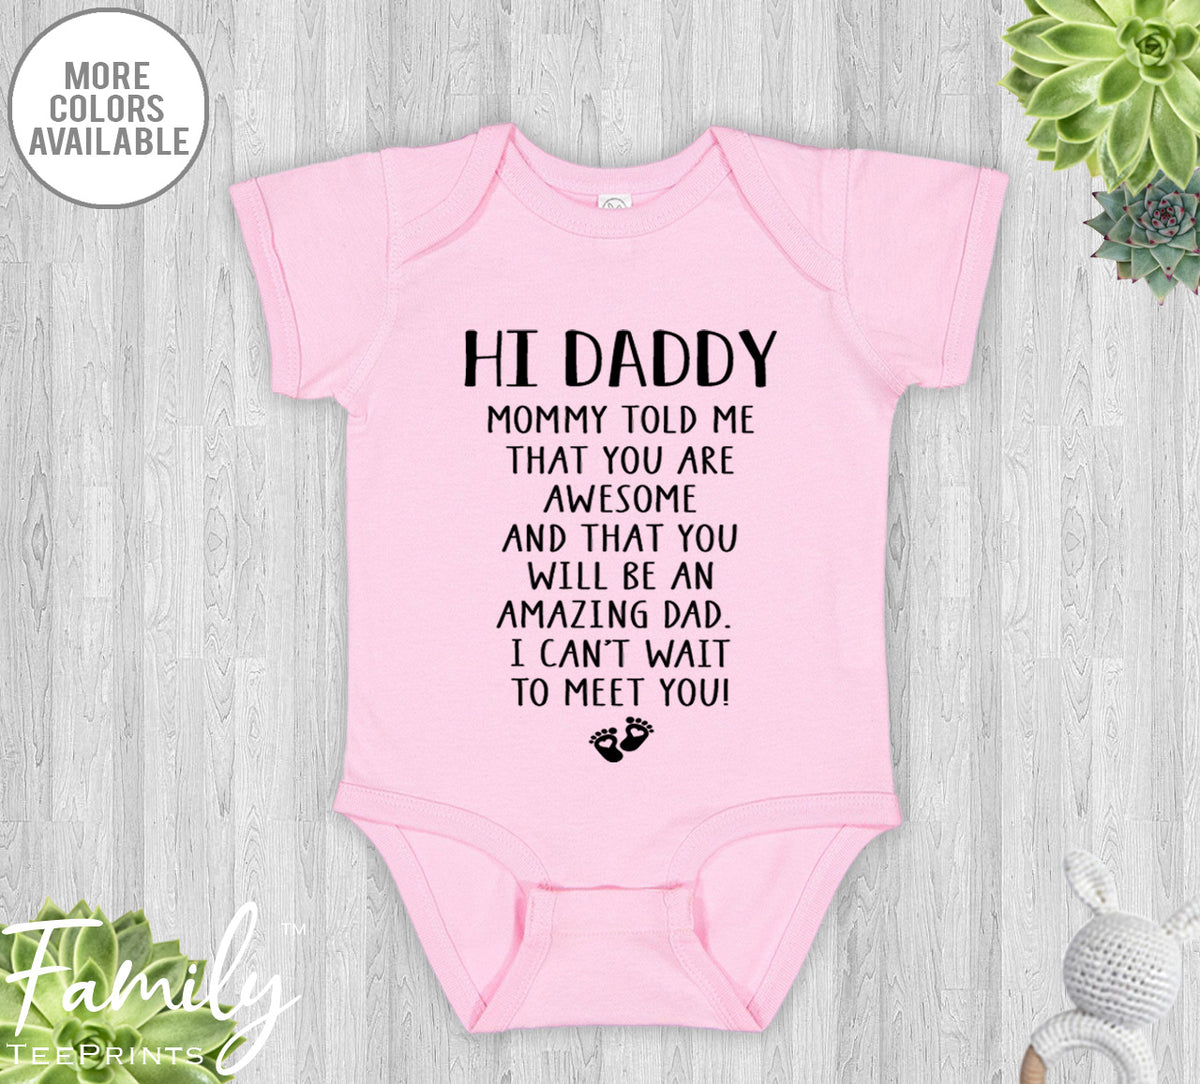 Hi Daddy... - Baby Onesie - Pregnancy Reveal Gift - Baby Announcement